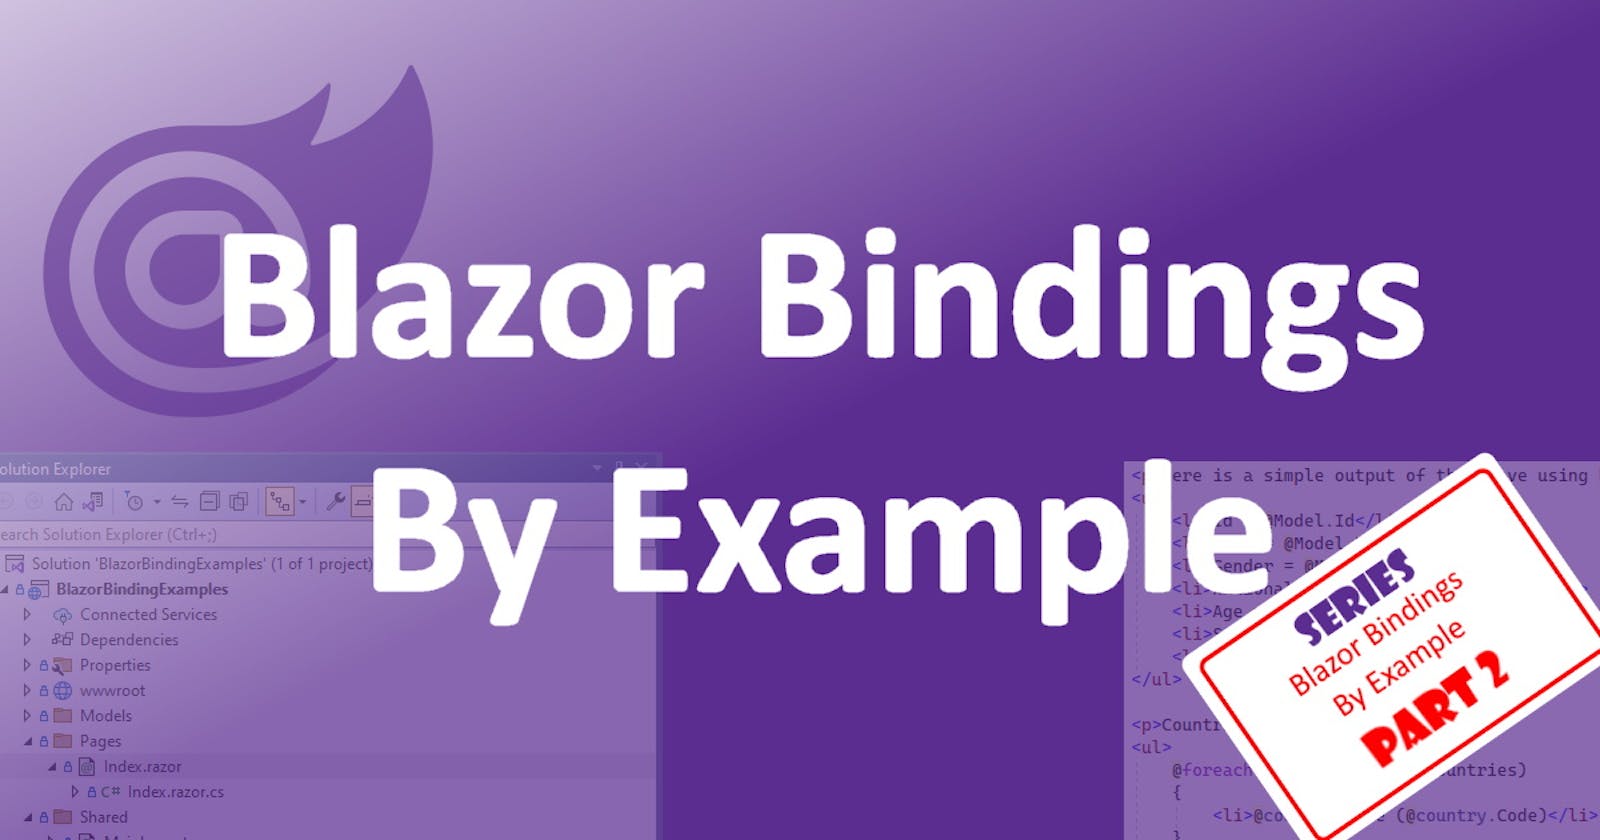 Blazor Bindings By Example - Part 2